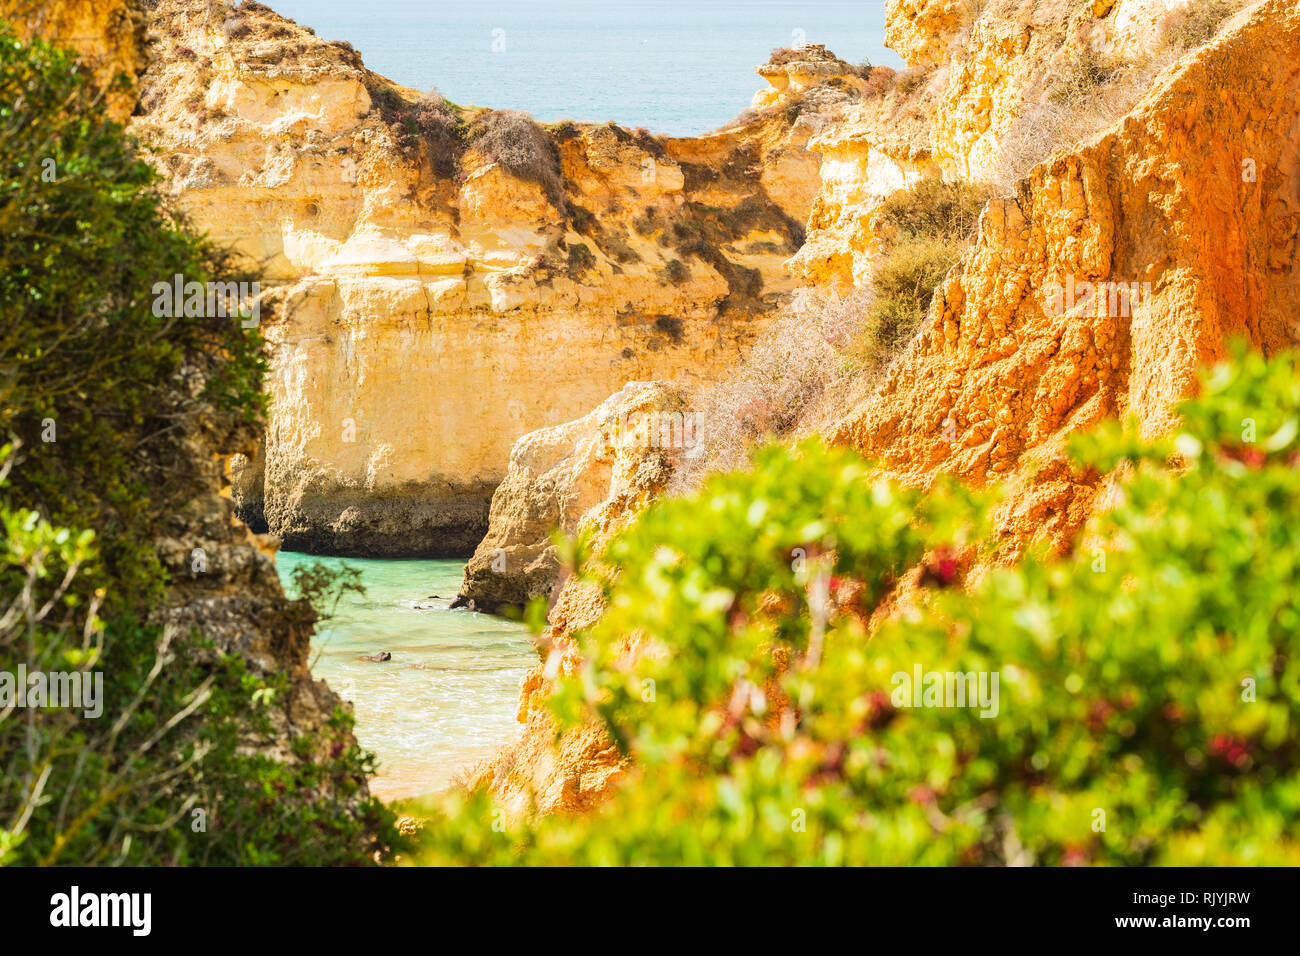 Looking through trees towards sunlit cliff face, Alvor, Algarve, Portugal, Europe Stock Photo